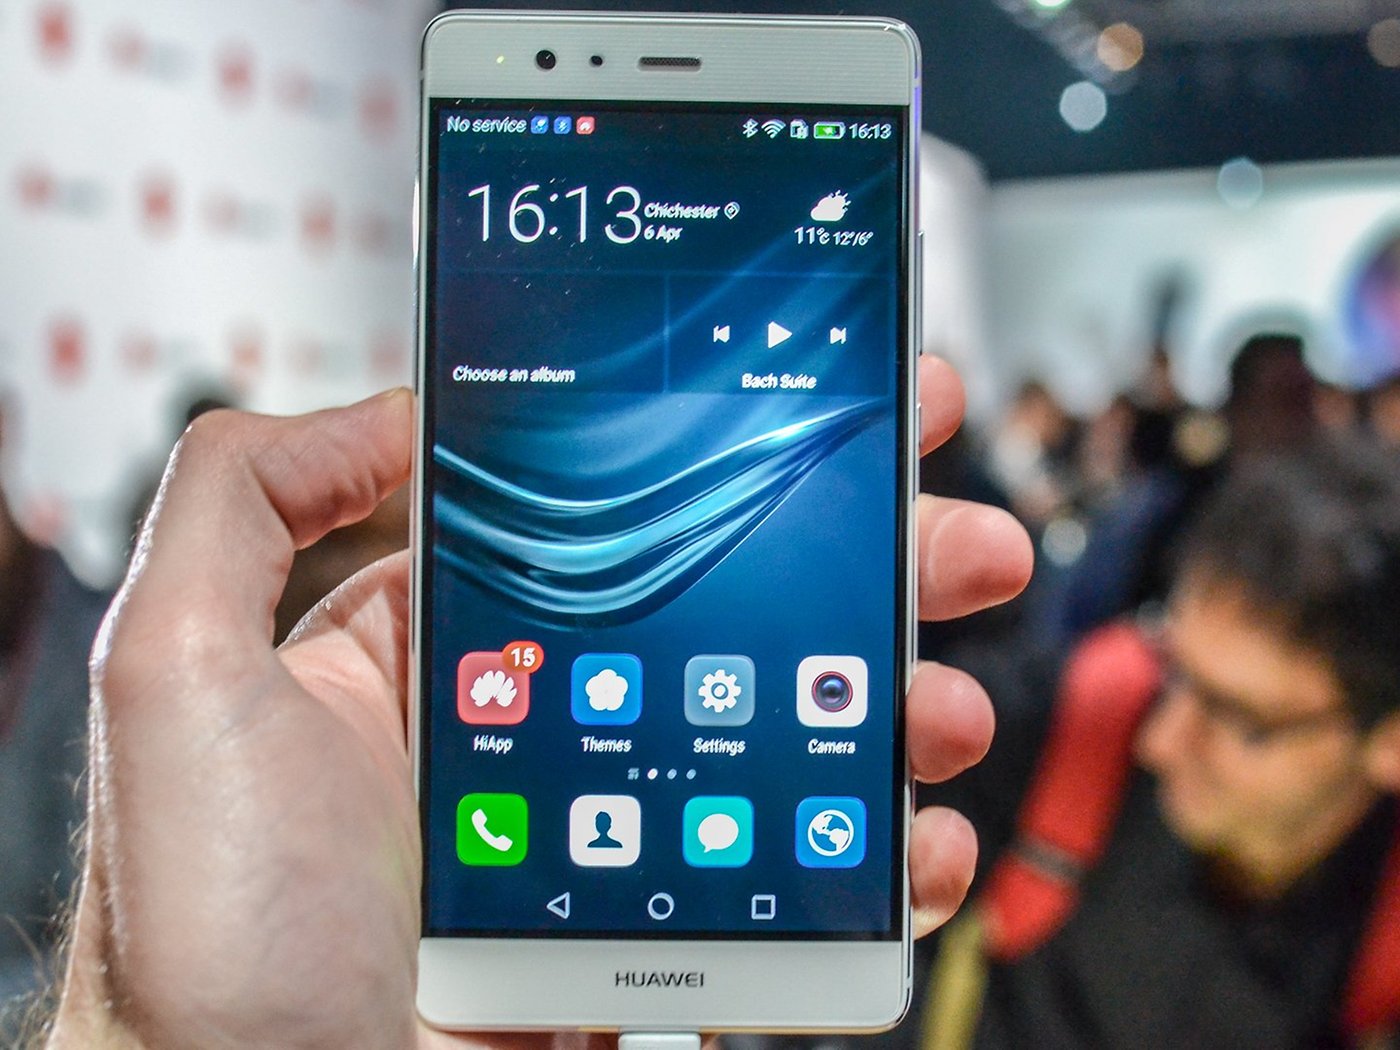 Vlek Verrast slinger Hands on: Huawei P9 Plus review | NextPit